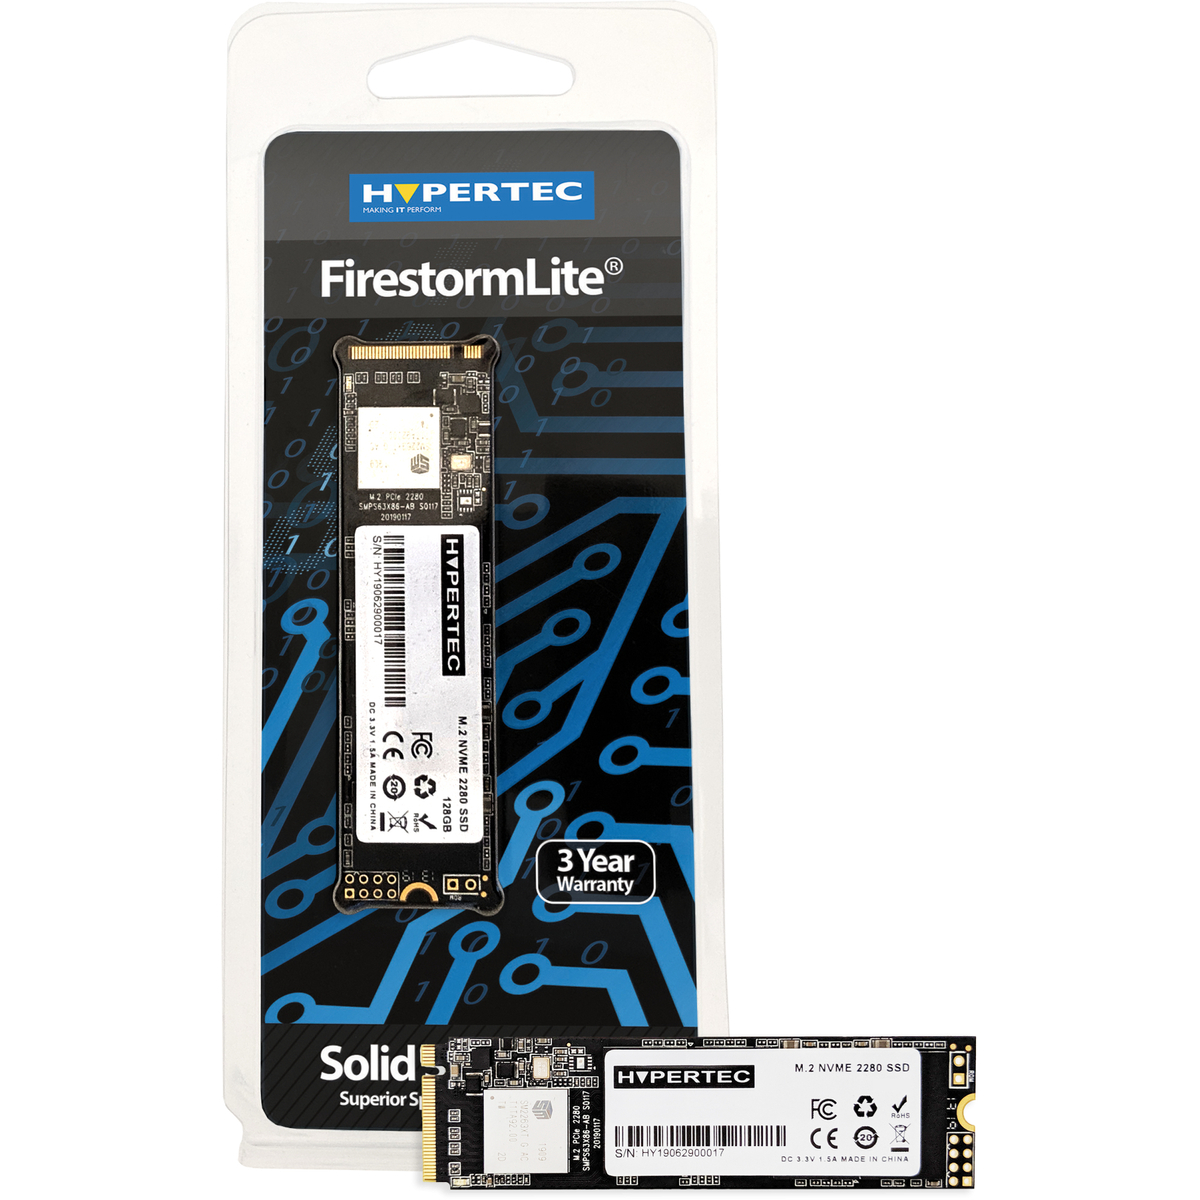 FirestormLite 1TB NVMe SSD